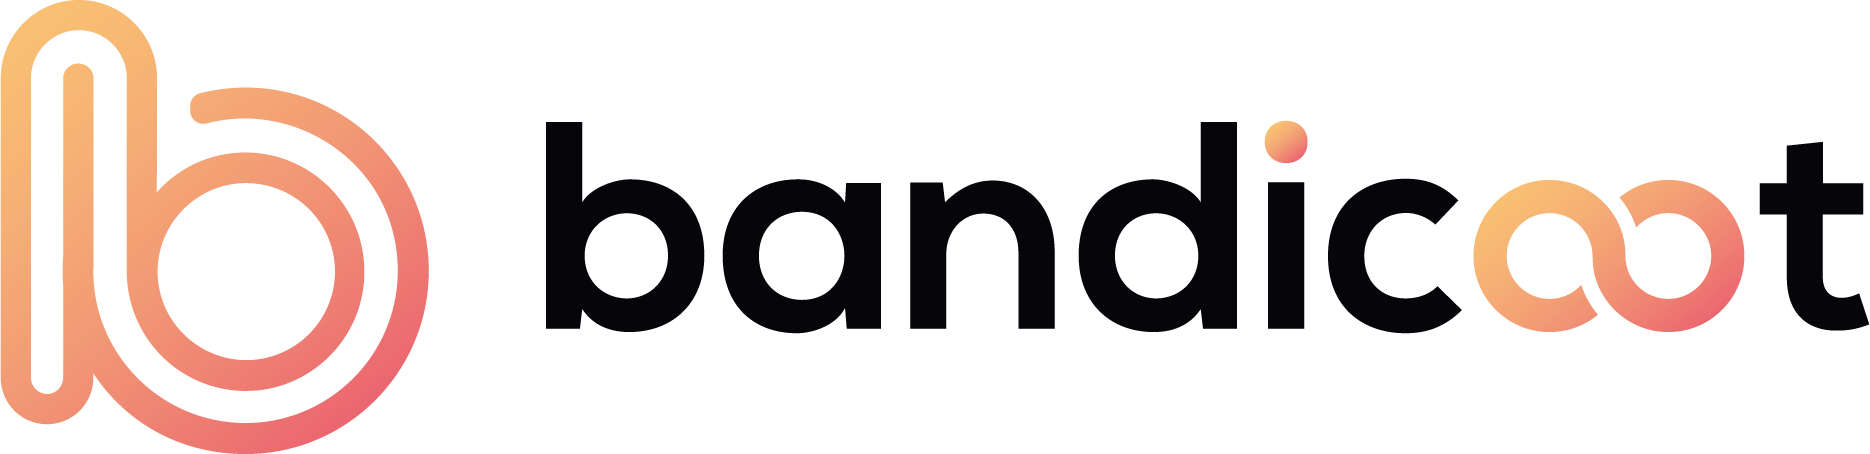 Bandicoot Marketing logo